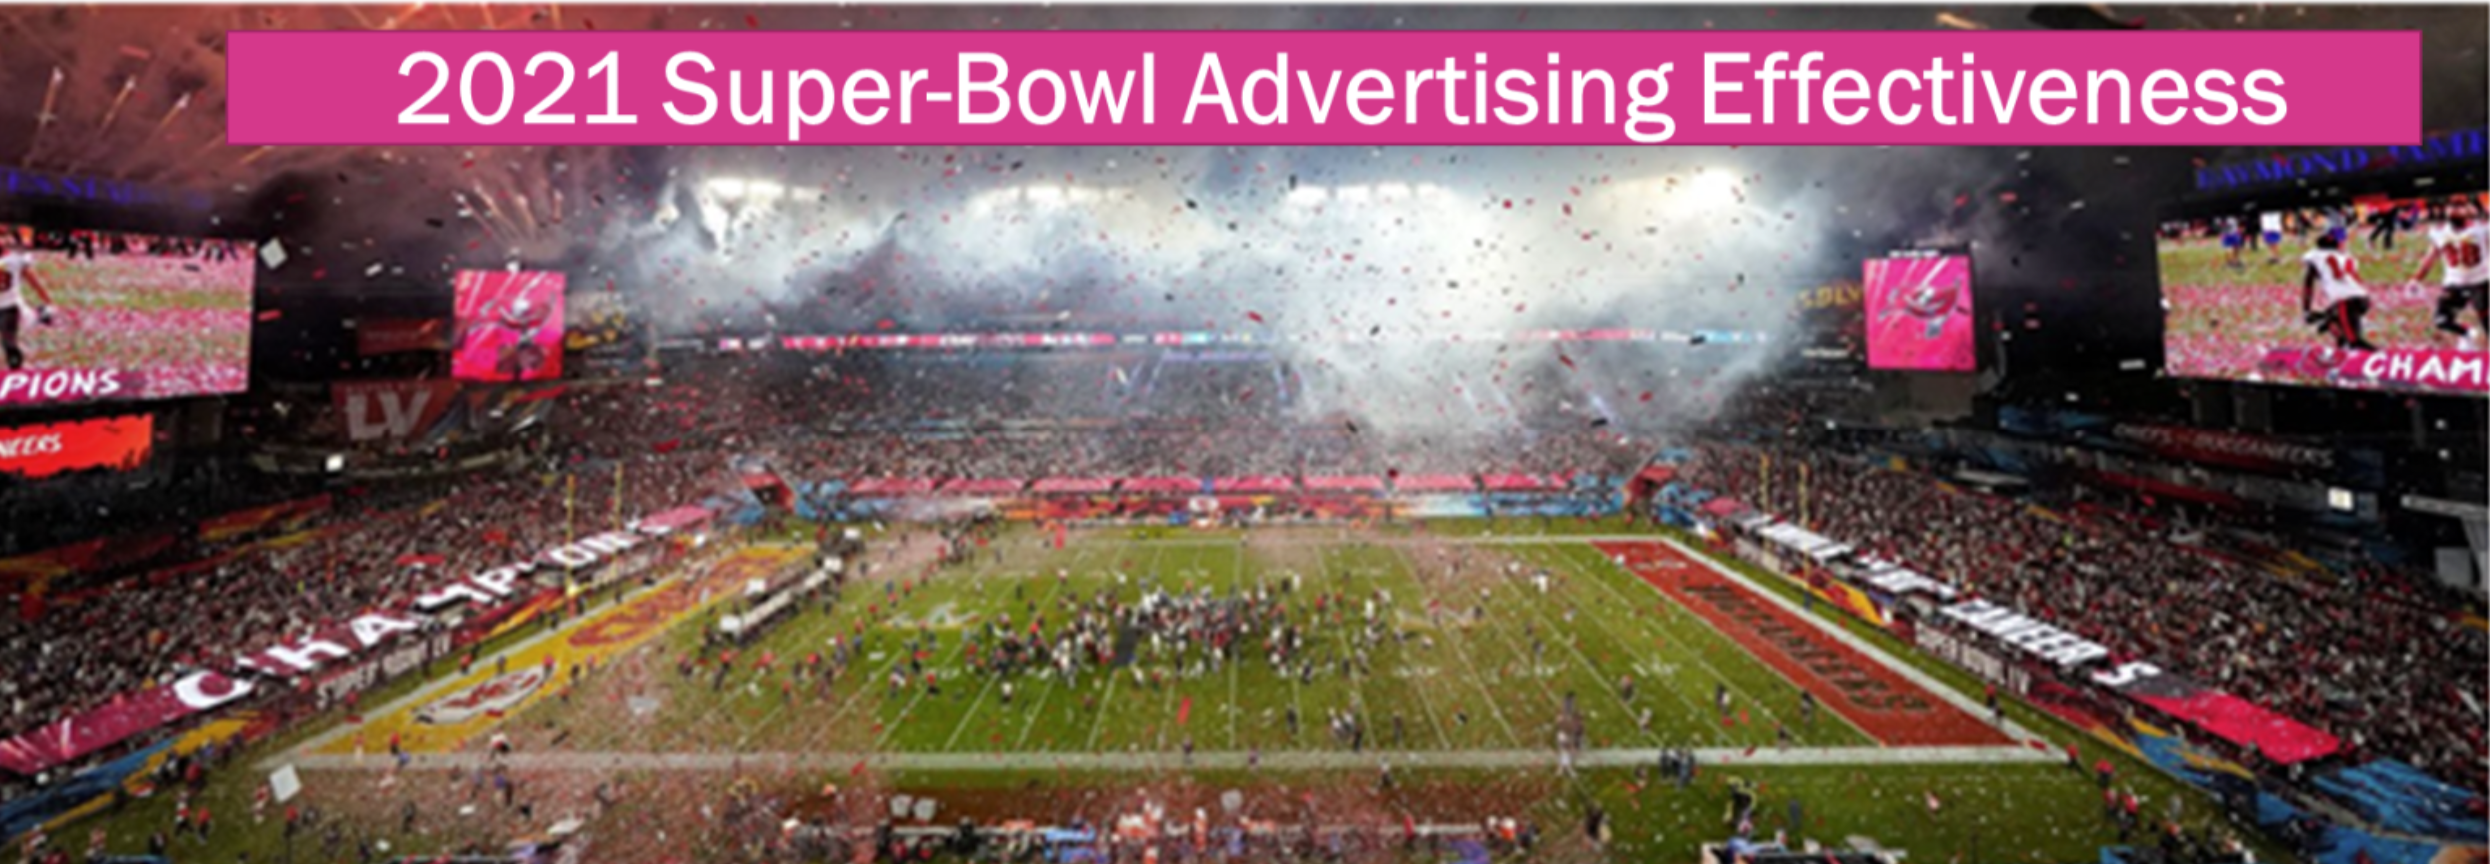 Super Bowl 2021 Advertising